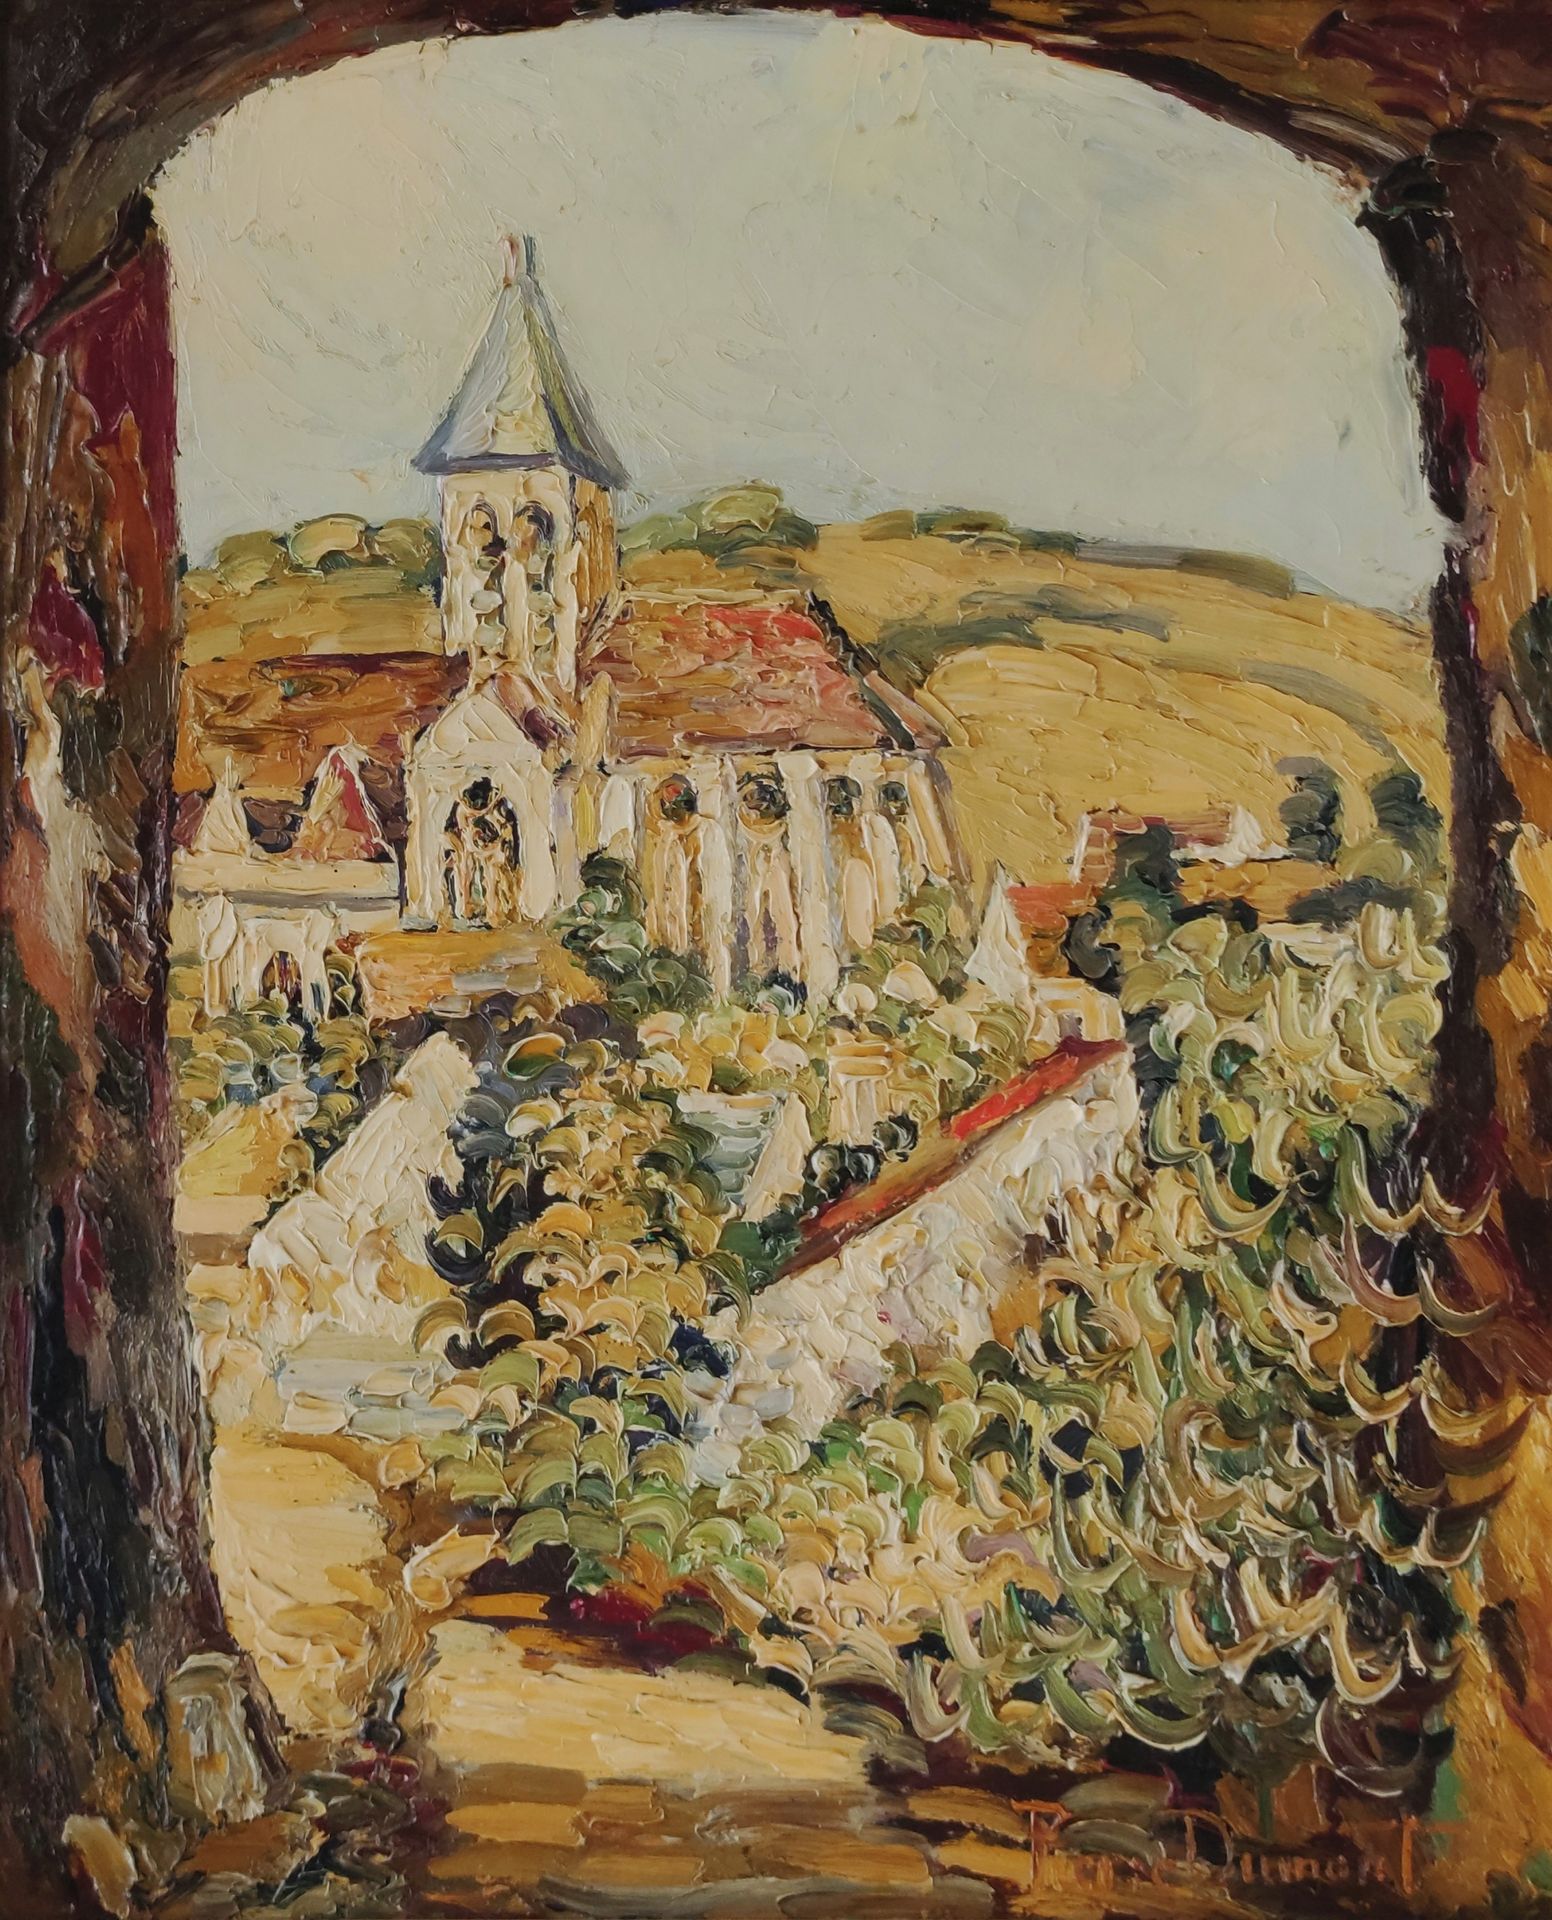 Null 皮埃尔-杜蒙 (1884-1936)

罗什-盖昂的景观

布面油画，右下角有签名

73 x 60厘米（内衬）。